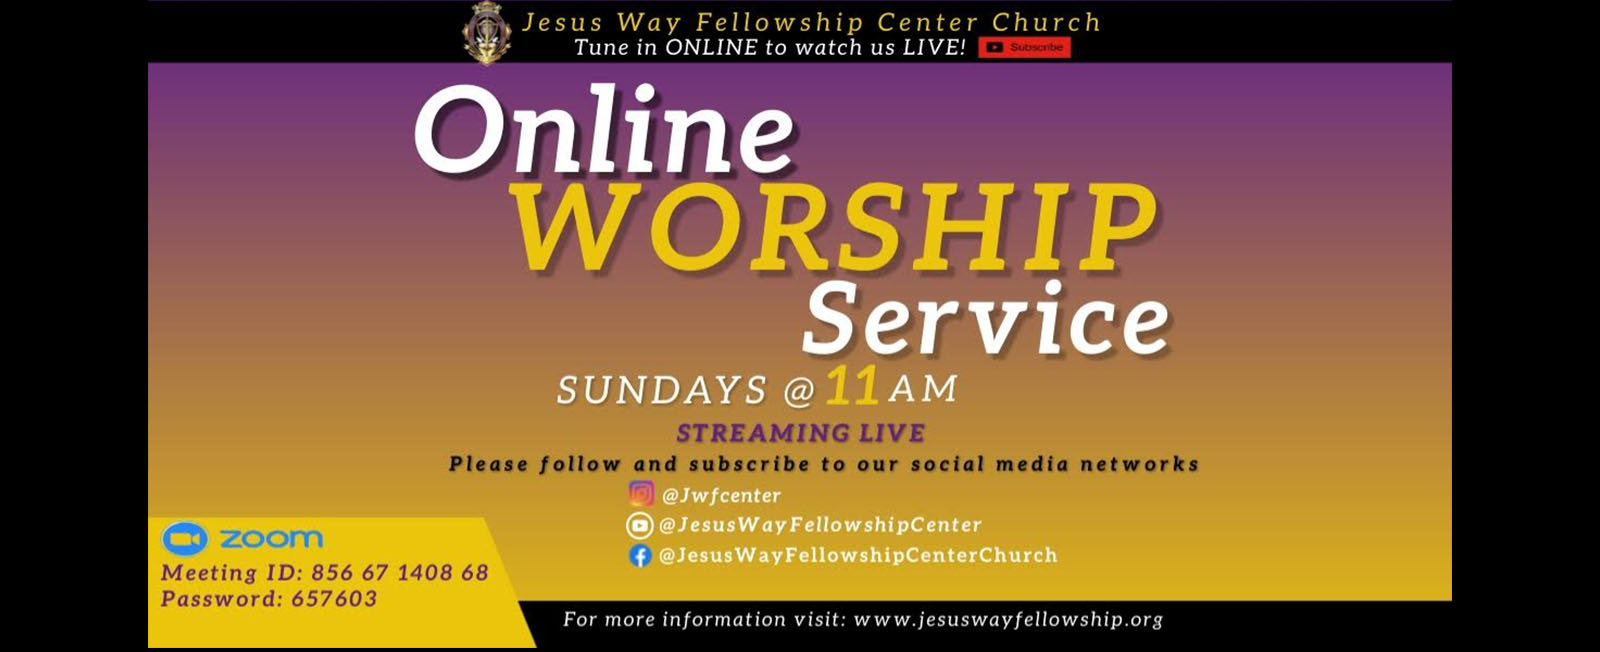 Jesus Way Fellowship Center